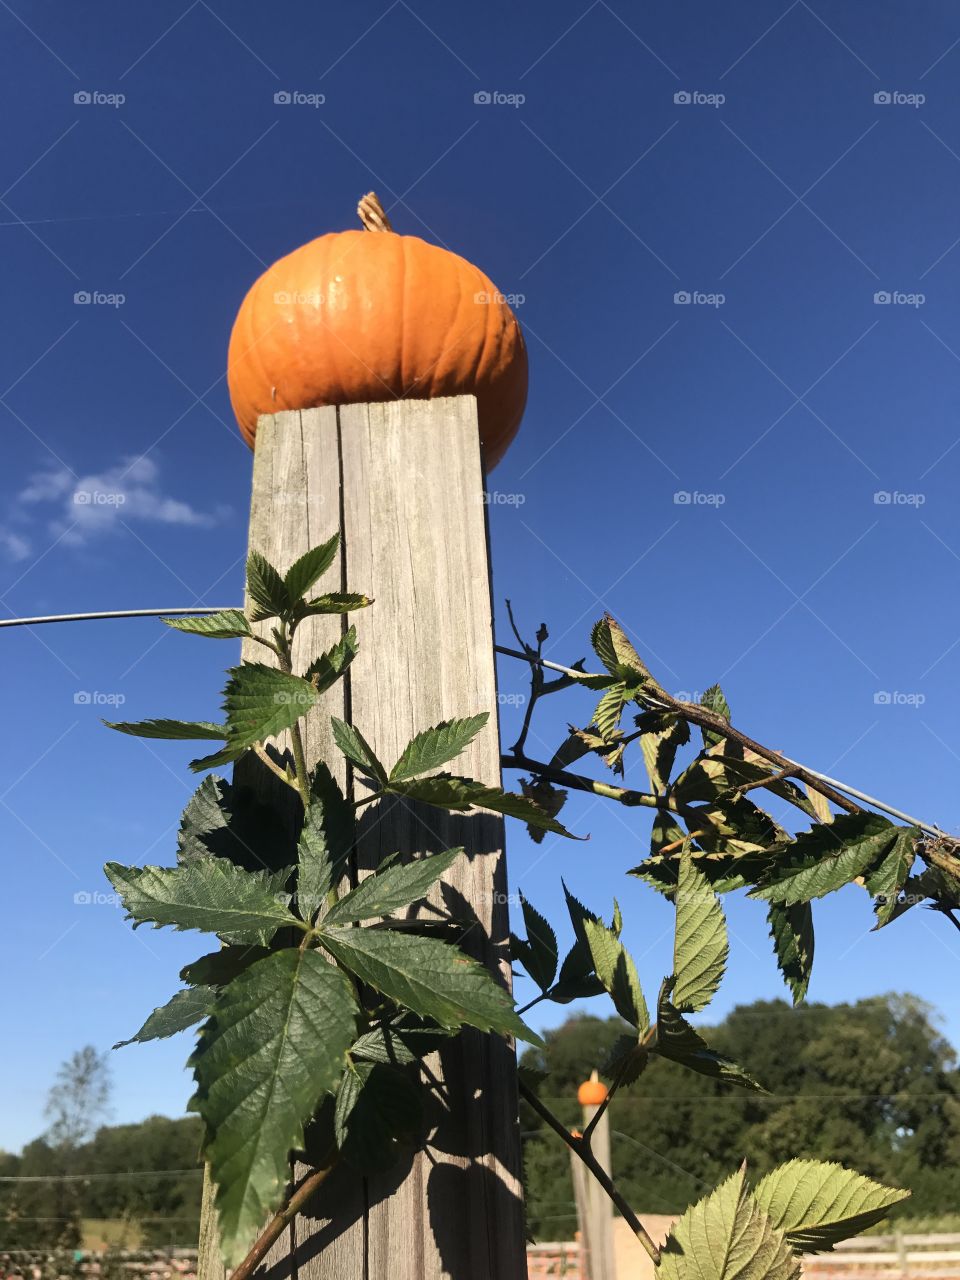 Pumpkin and the blackberry vine